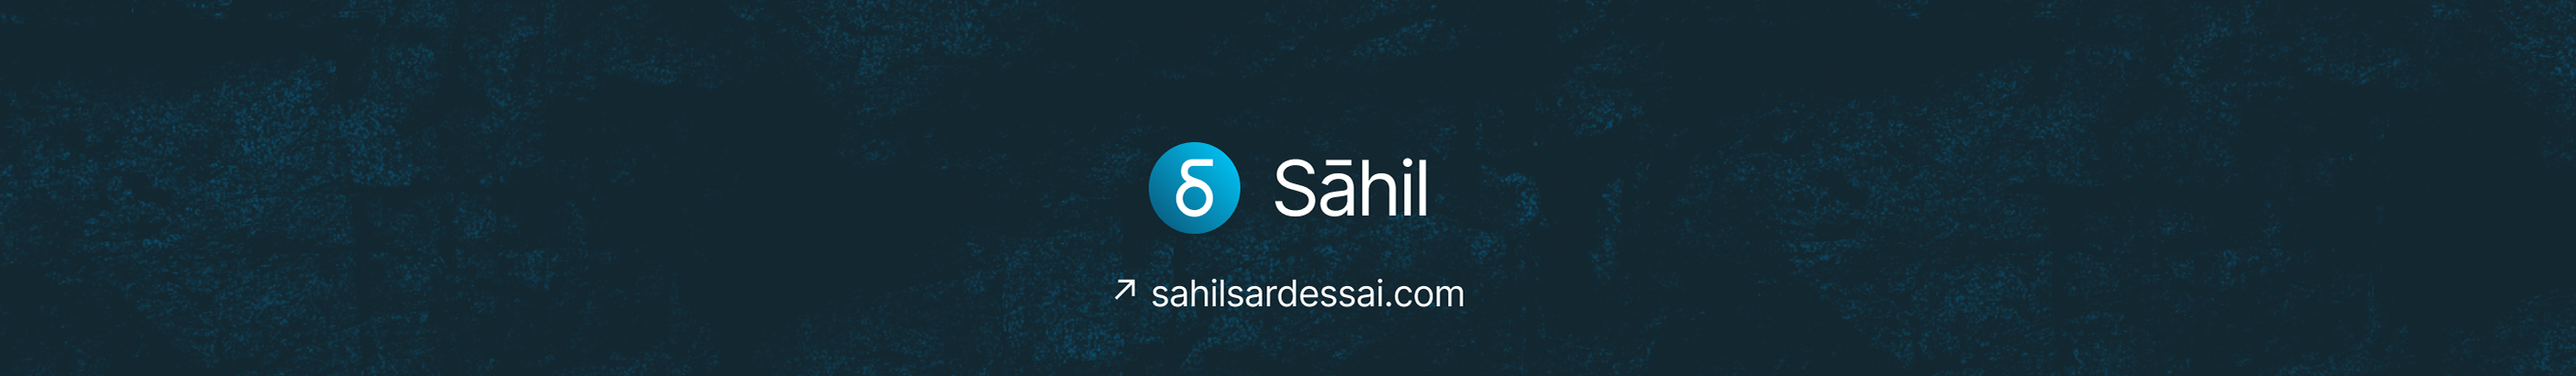 Banner profilu uživatele Sahil Sardessai